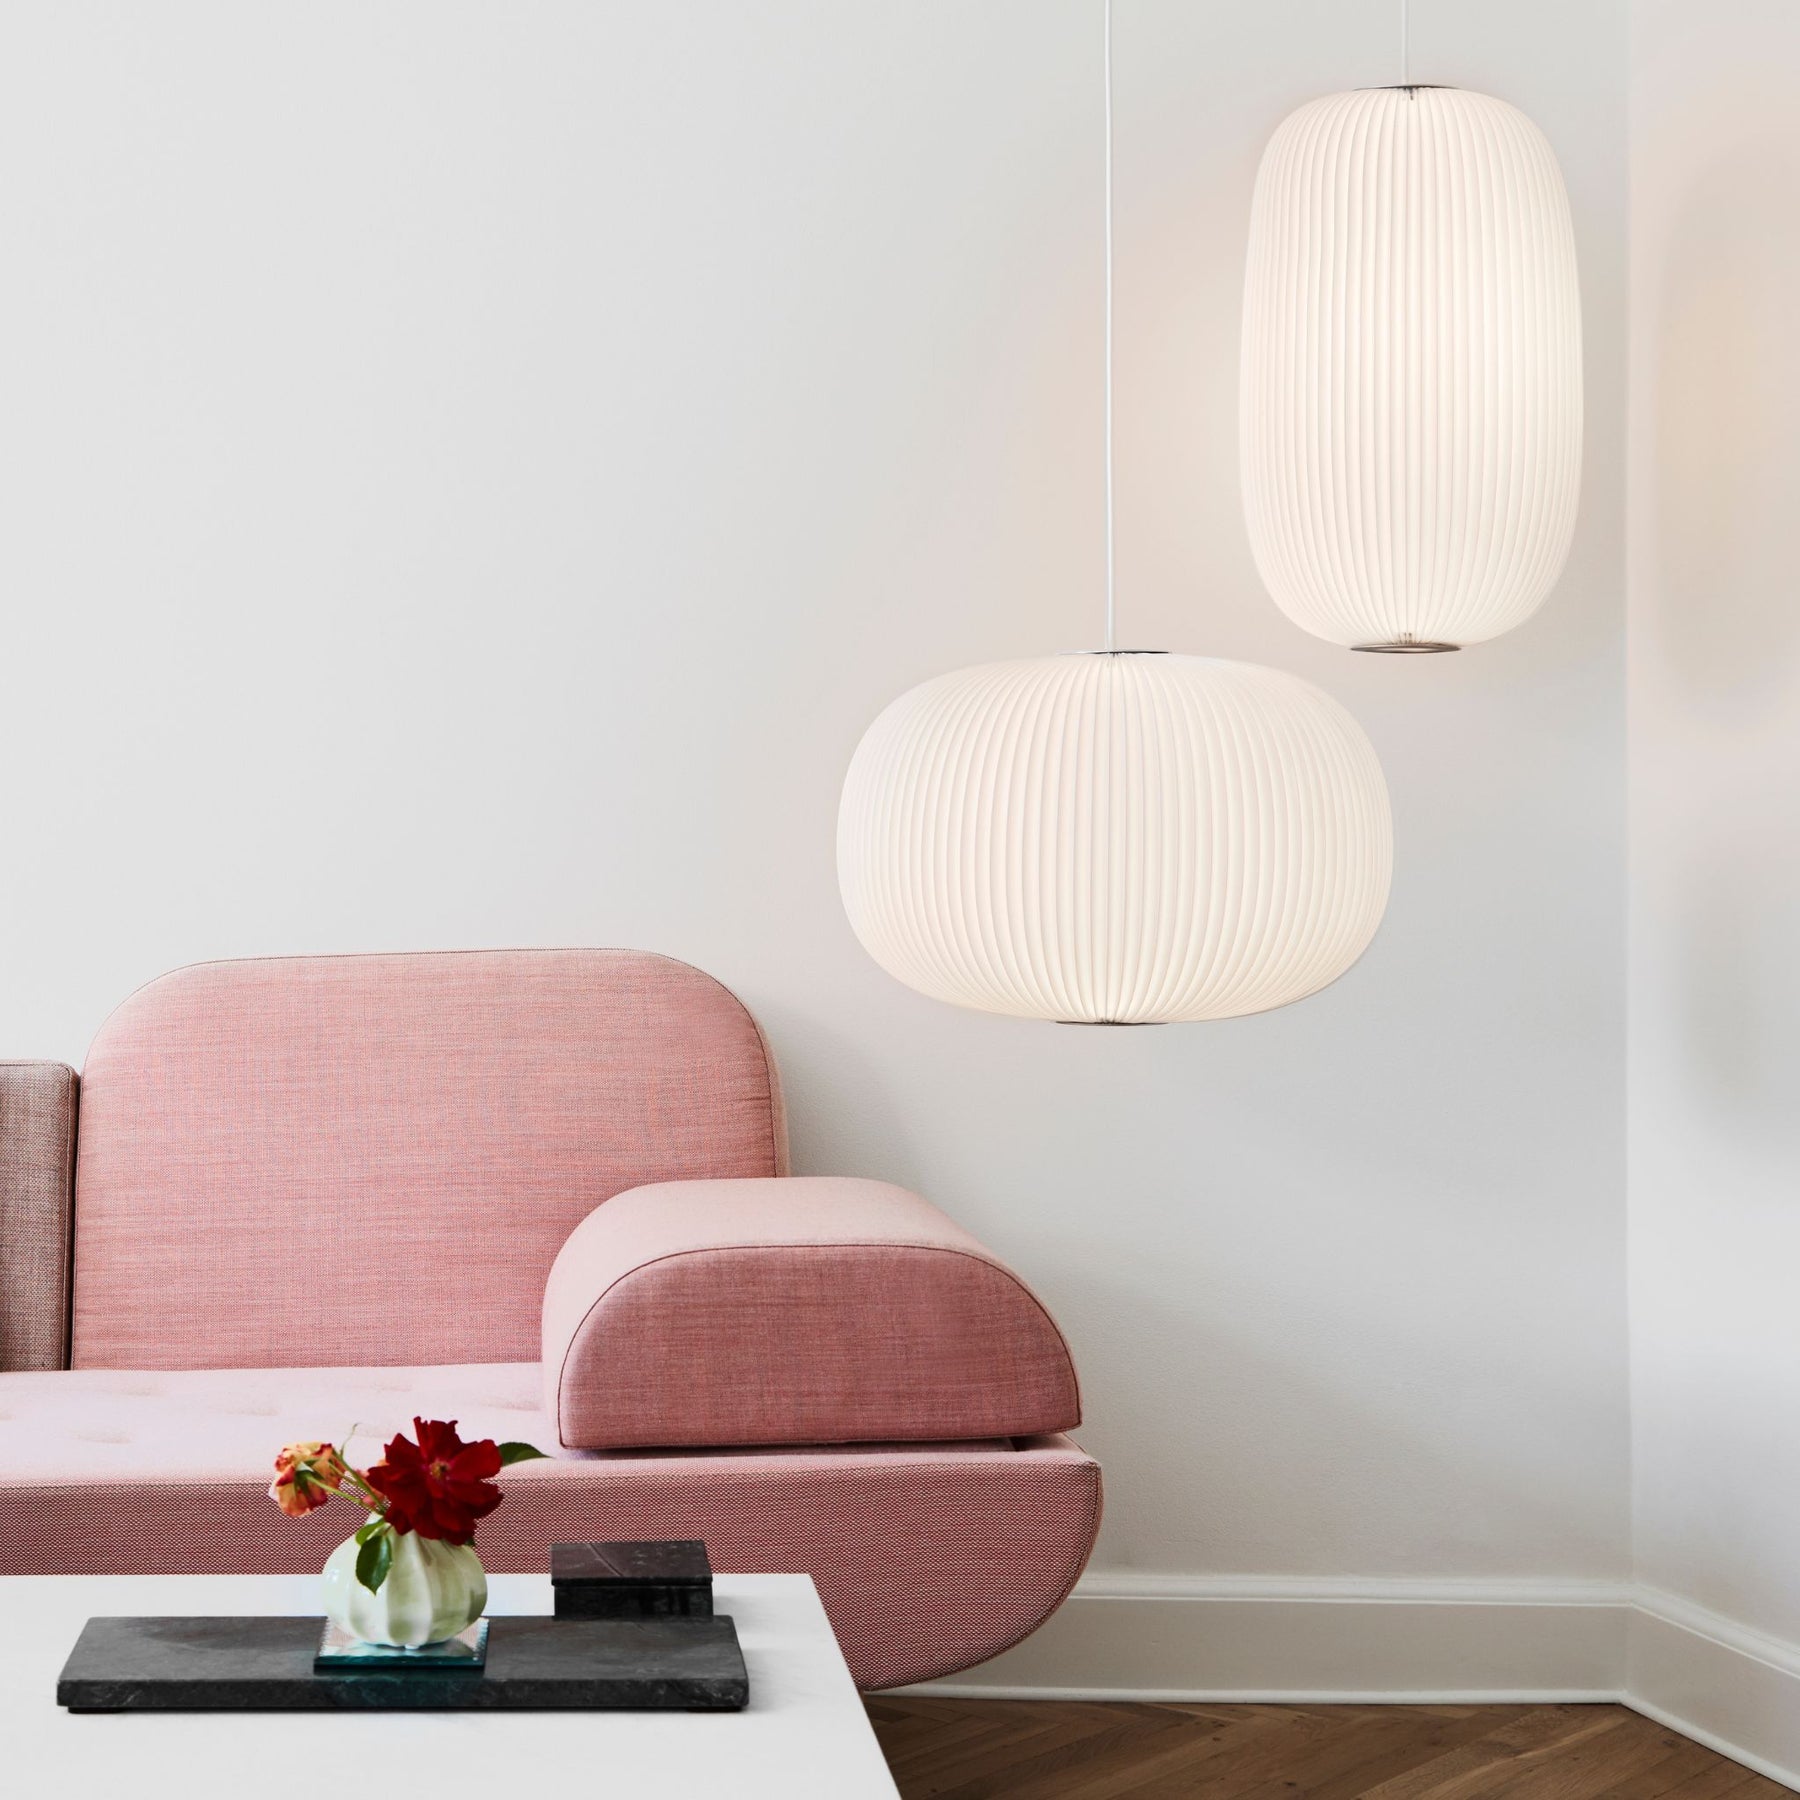 LeKlint Lamella Pendant Lights in Living room with pink wool sofa.